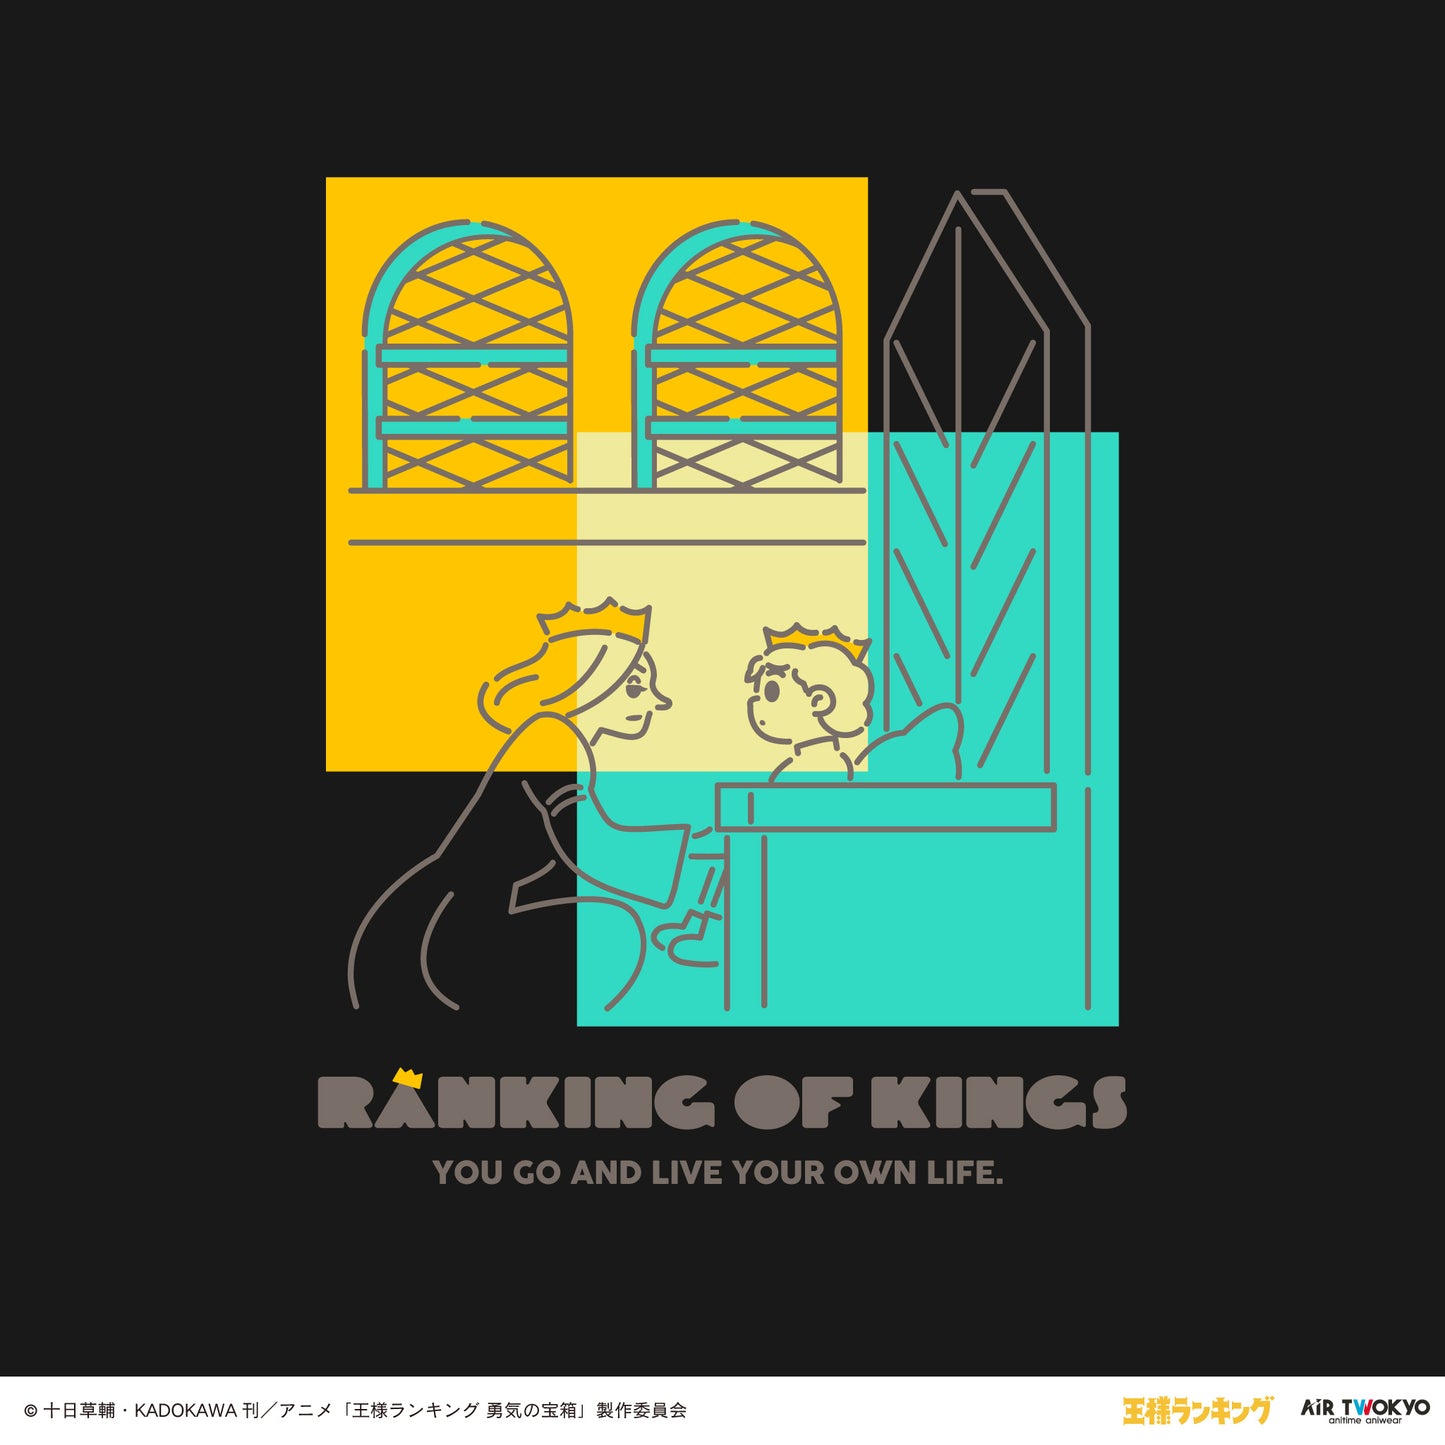 “Ranking of Kings" Scene illustration sweatshirt 2